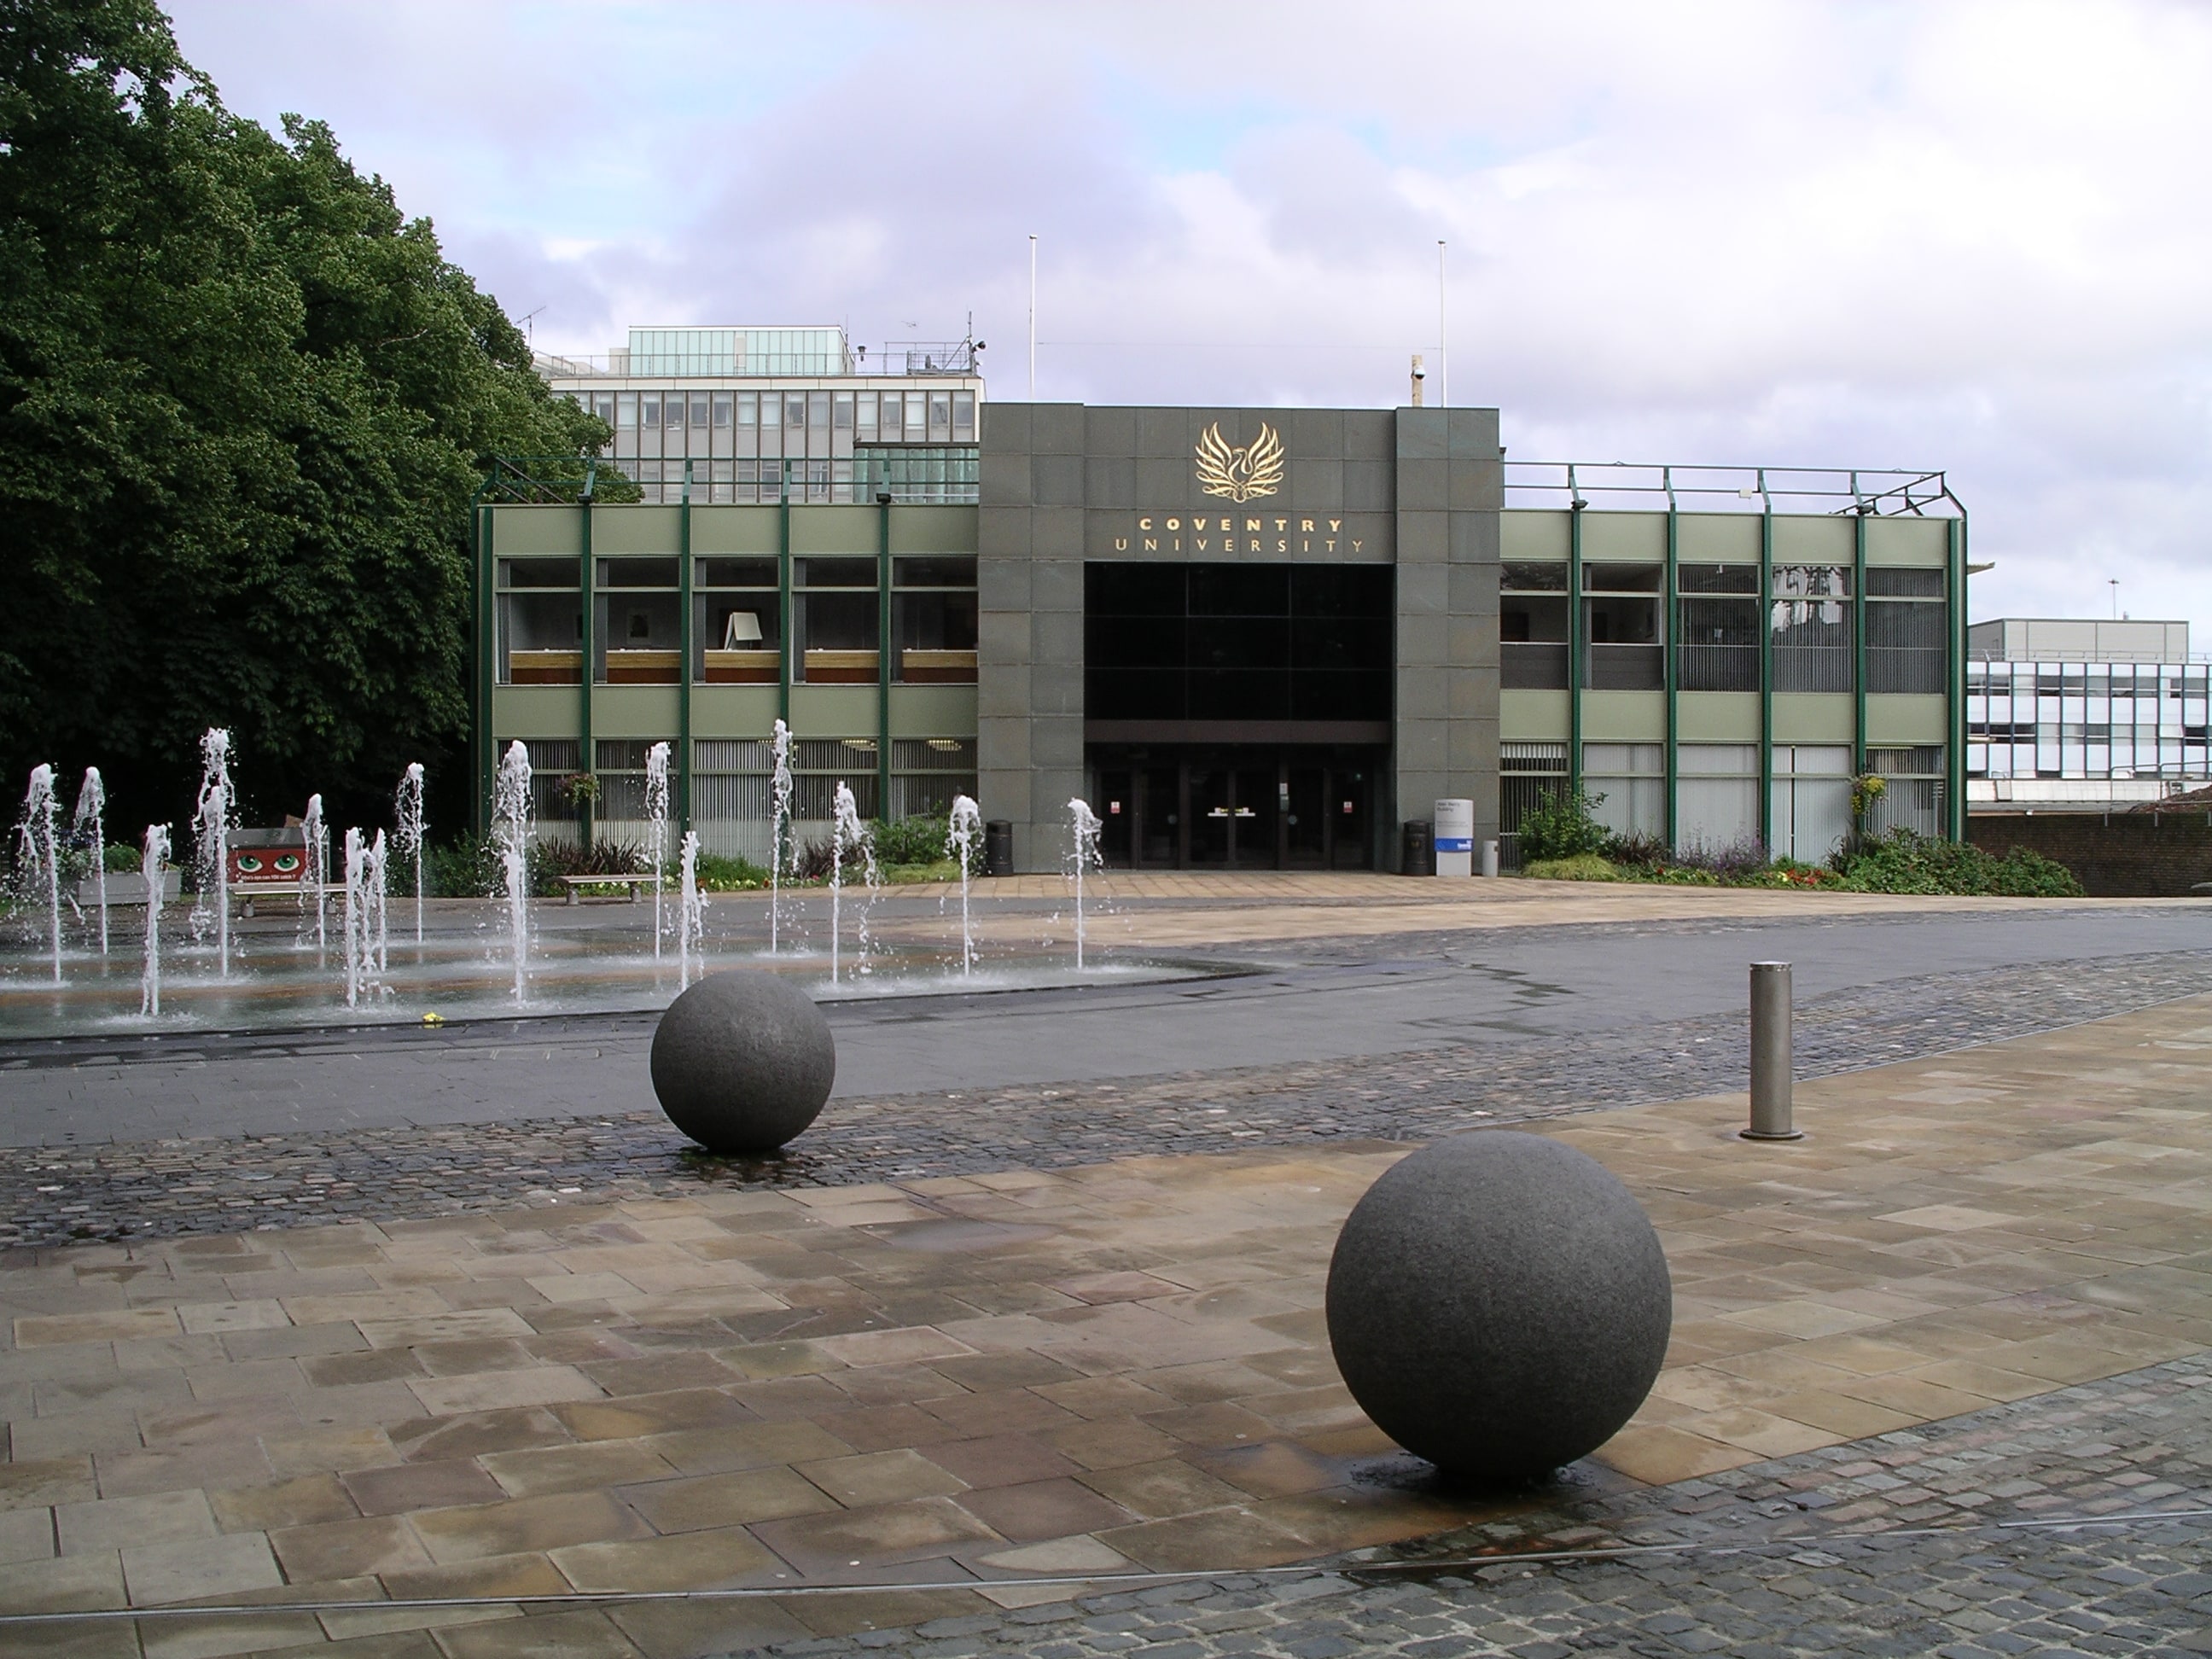 Coventry university